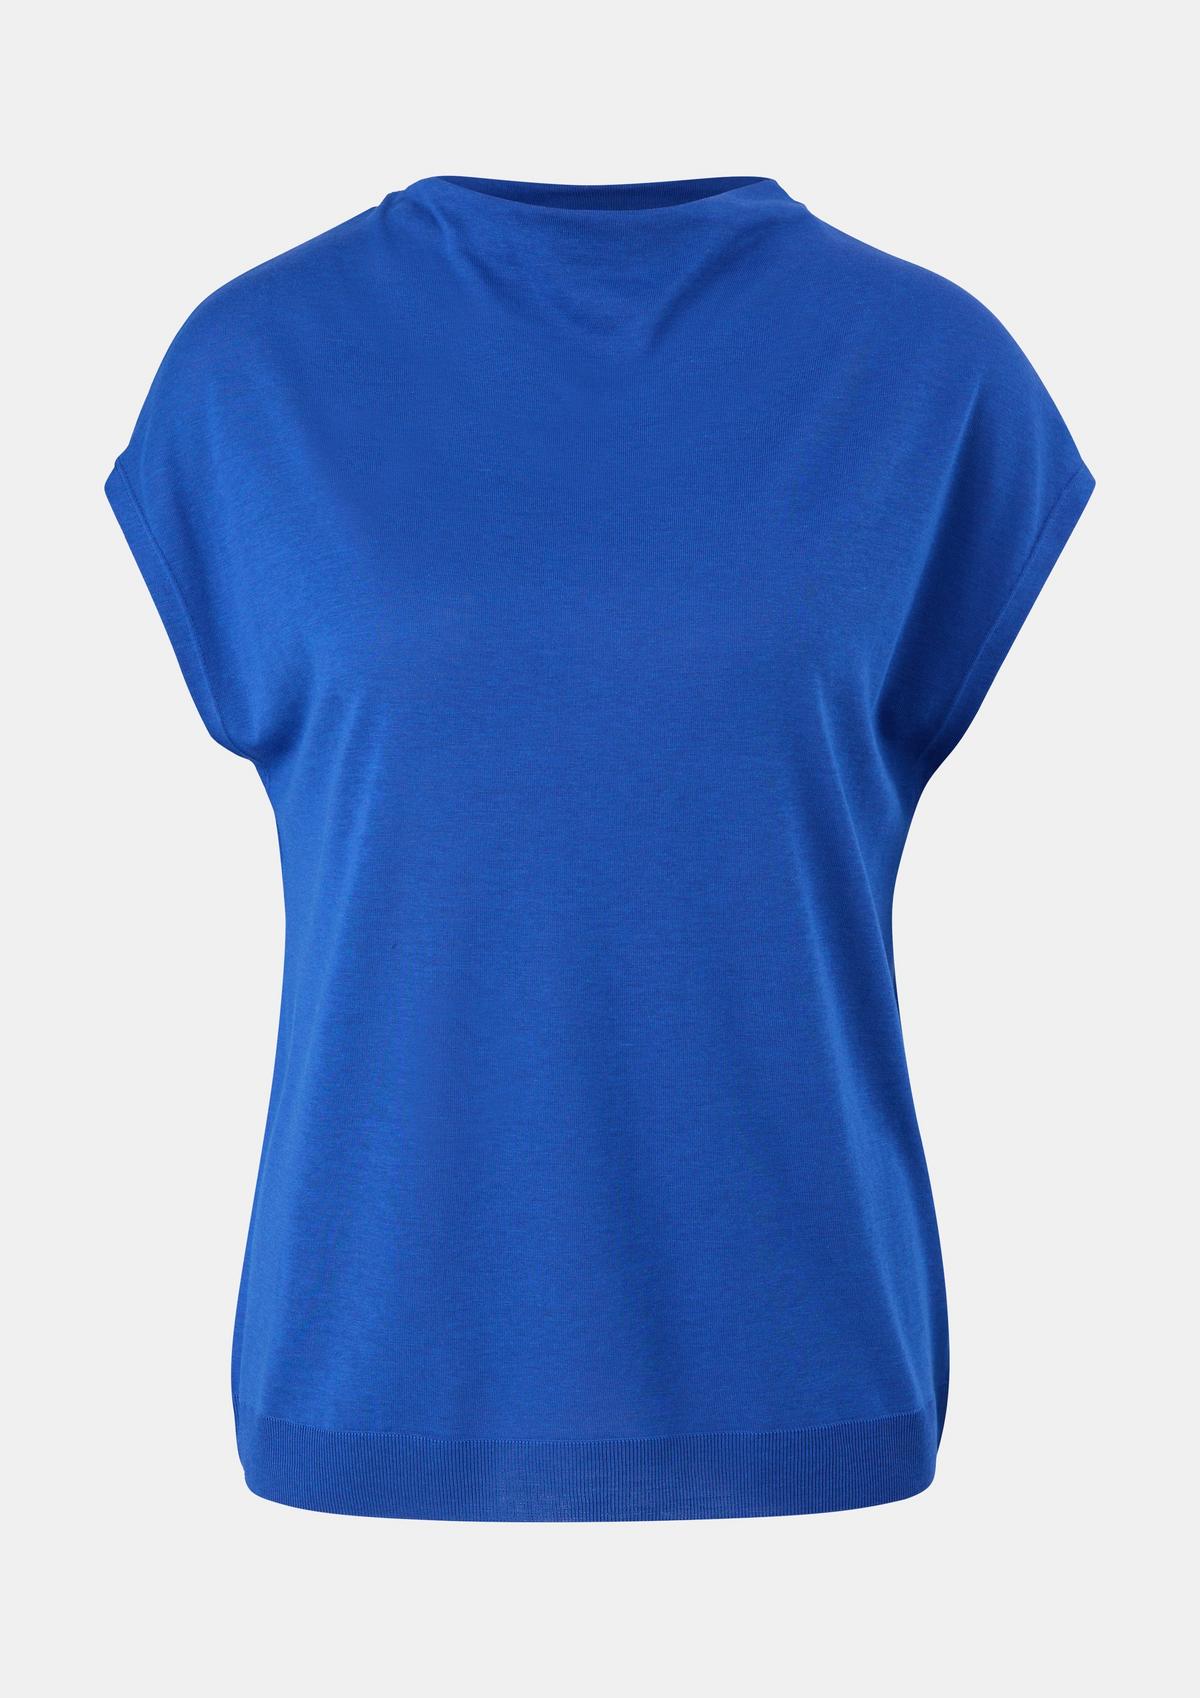 Ärmelloses Shirt aus | Strickjersey Comma royalblau 